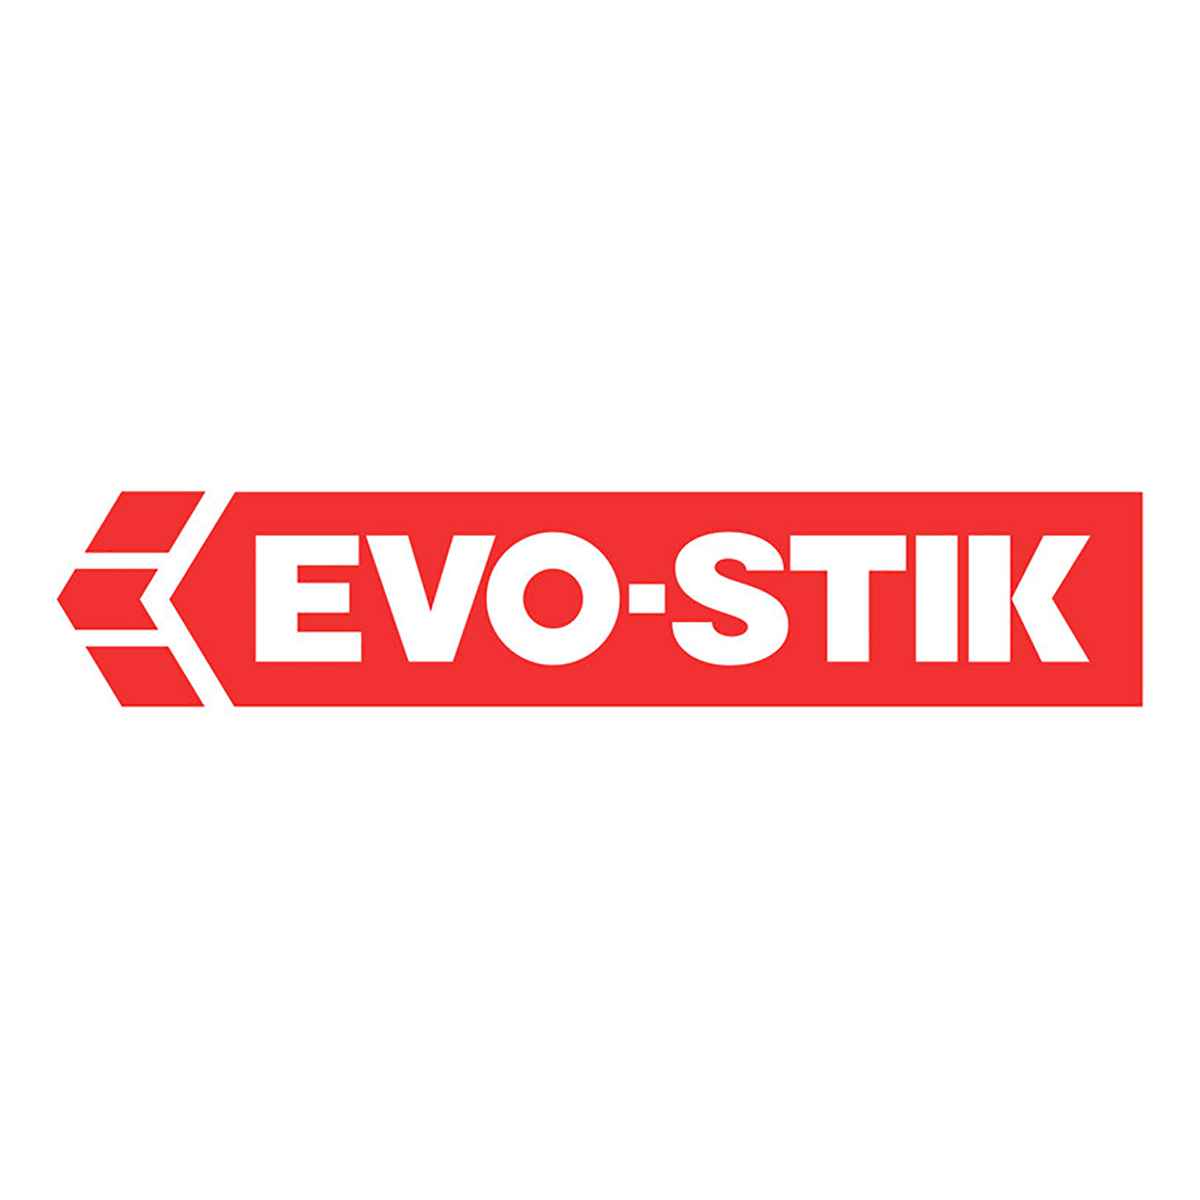 Bostik Evo-stik Herder "Accelerator F" tørrdrakt, 165 ml